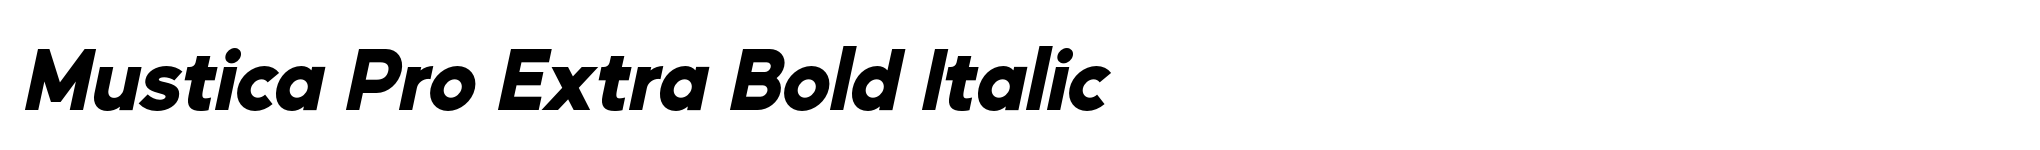 Mustica Pro Extra Bold Italic image